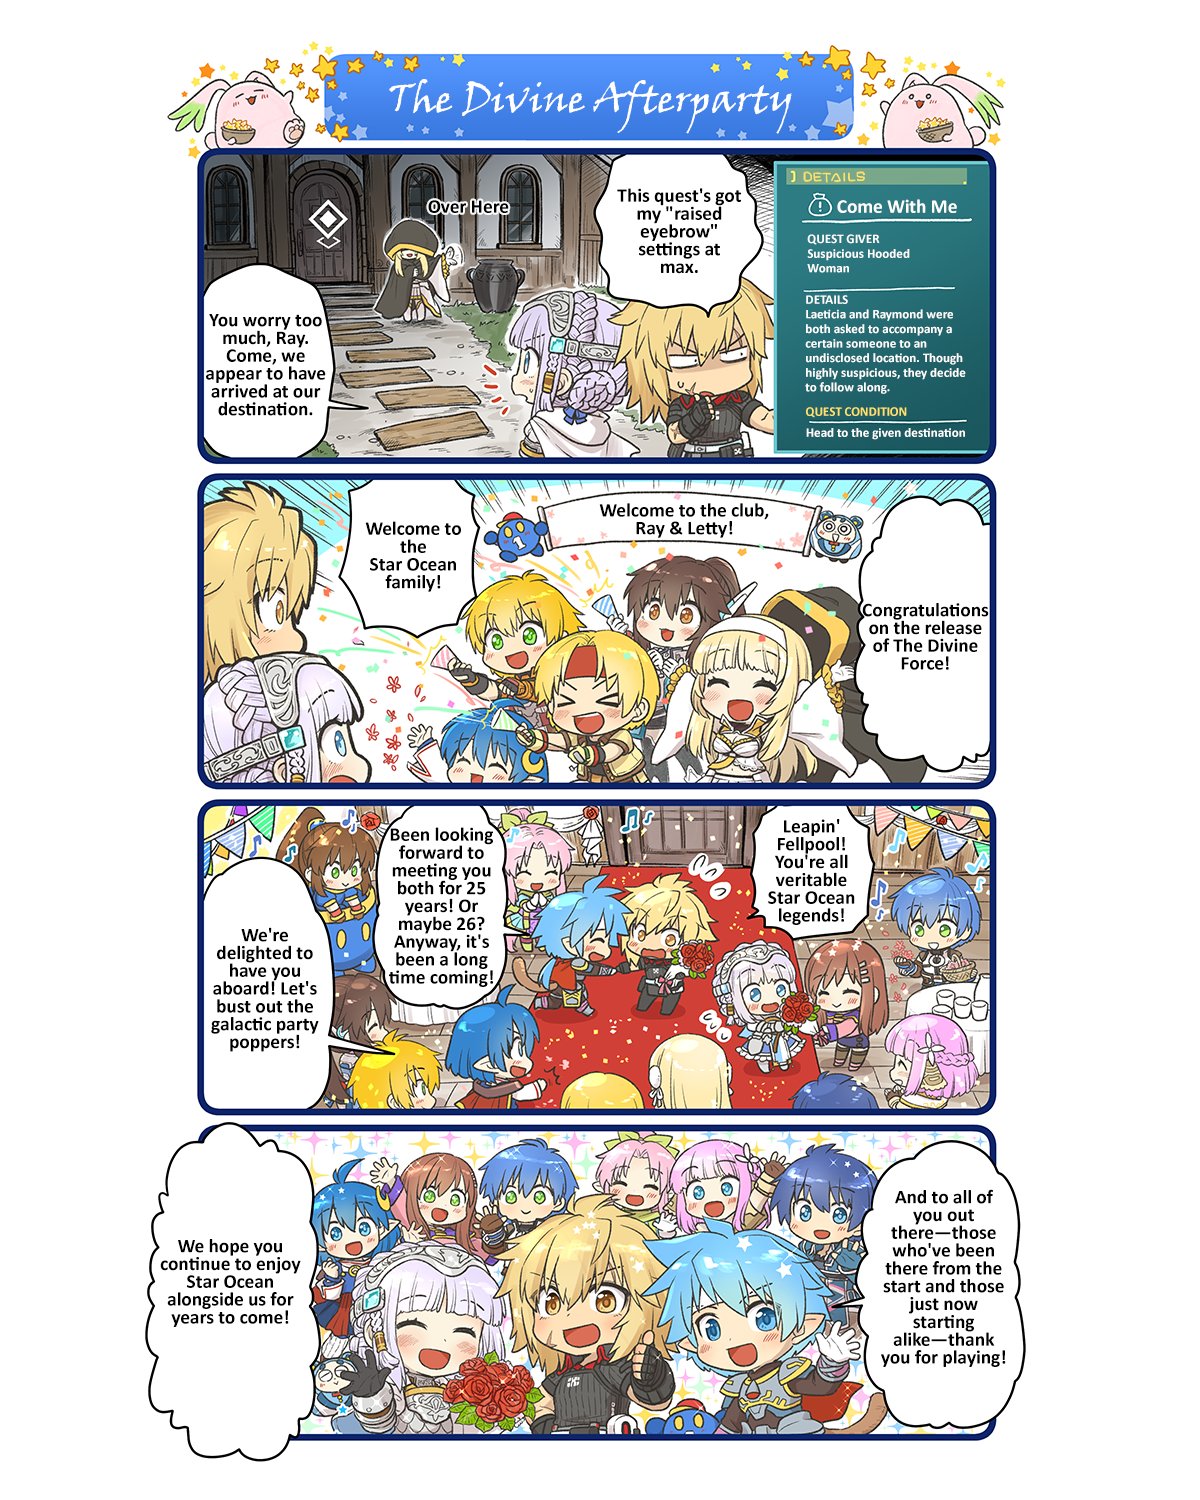 Characters Unite for Last Star Ocean: The Divine Mini Manga  